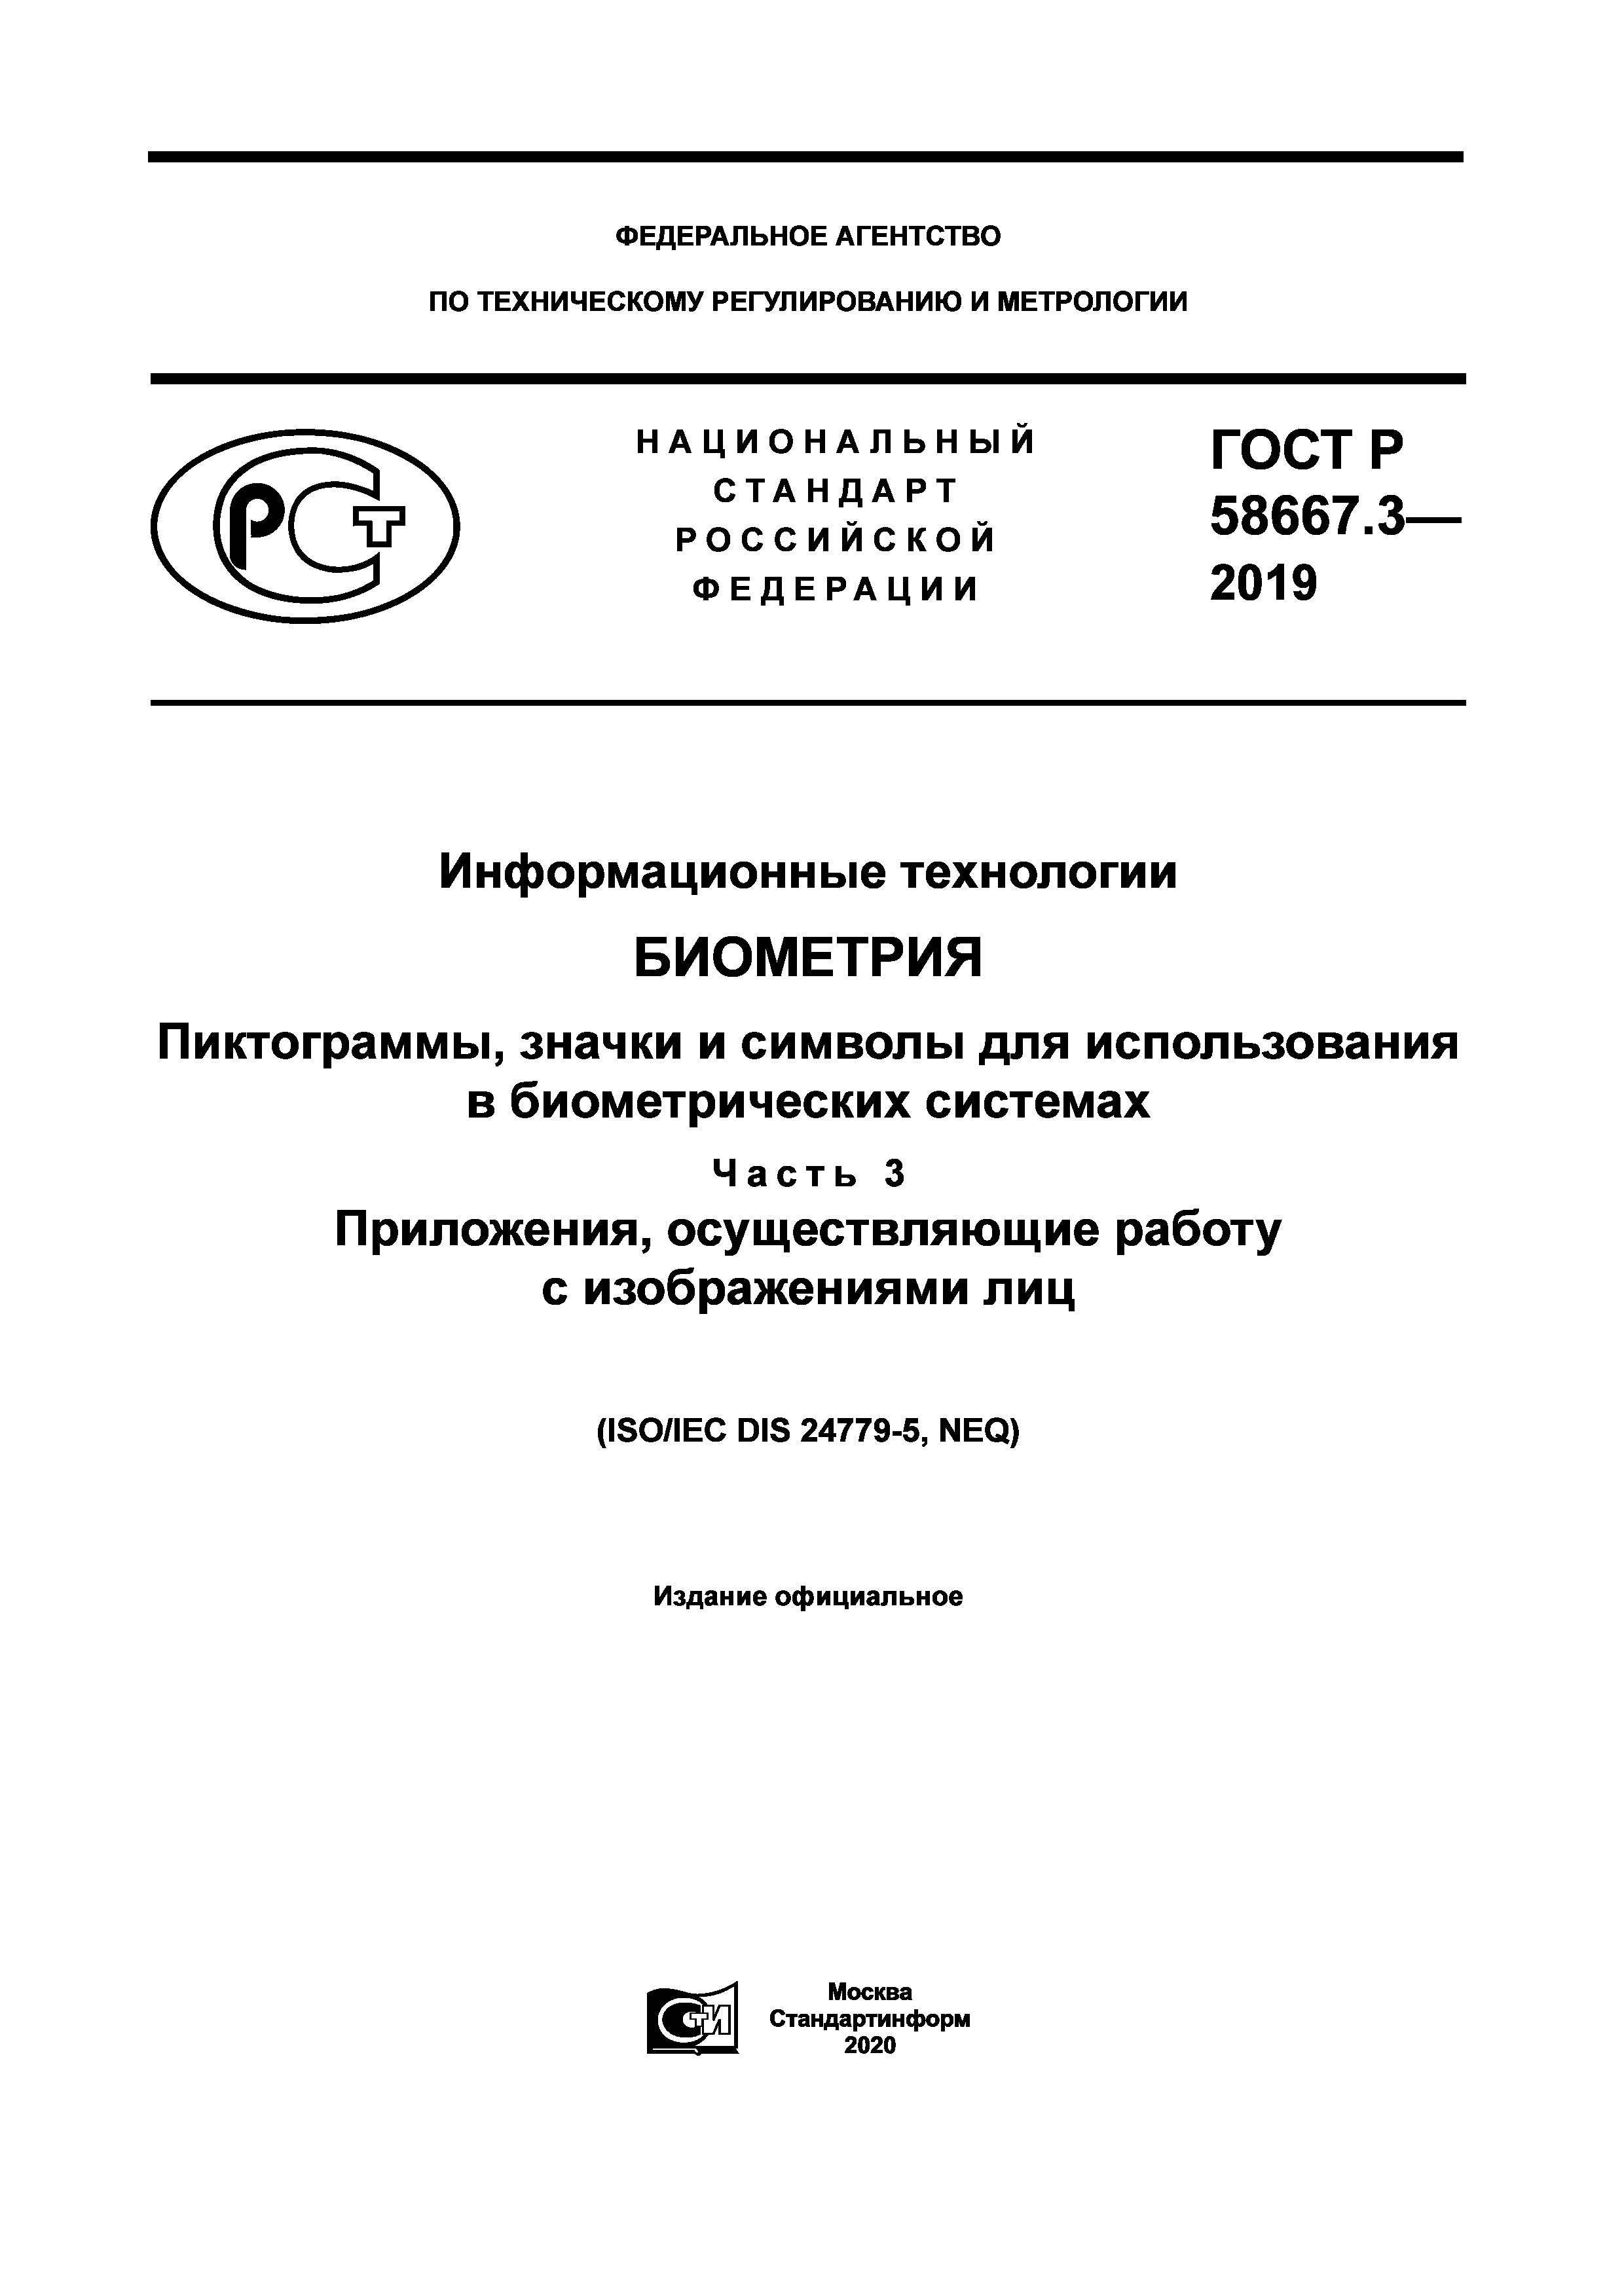 ГОСТ Р 58667.3-2019